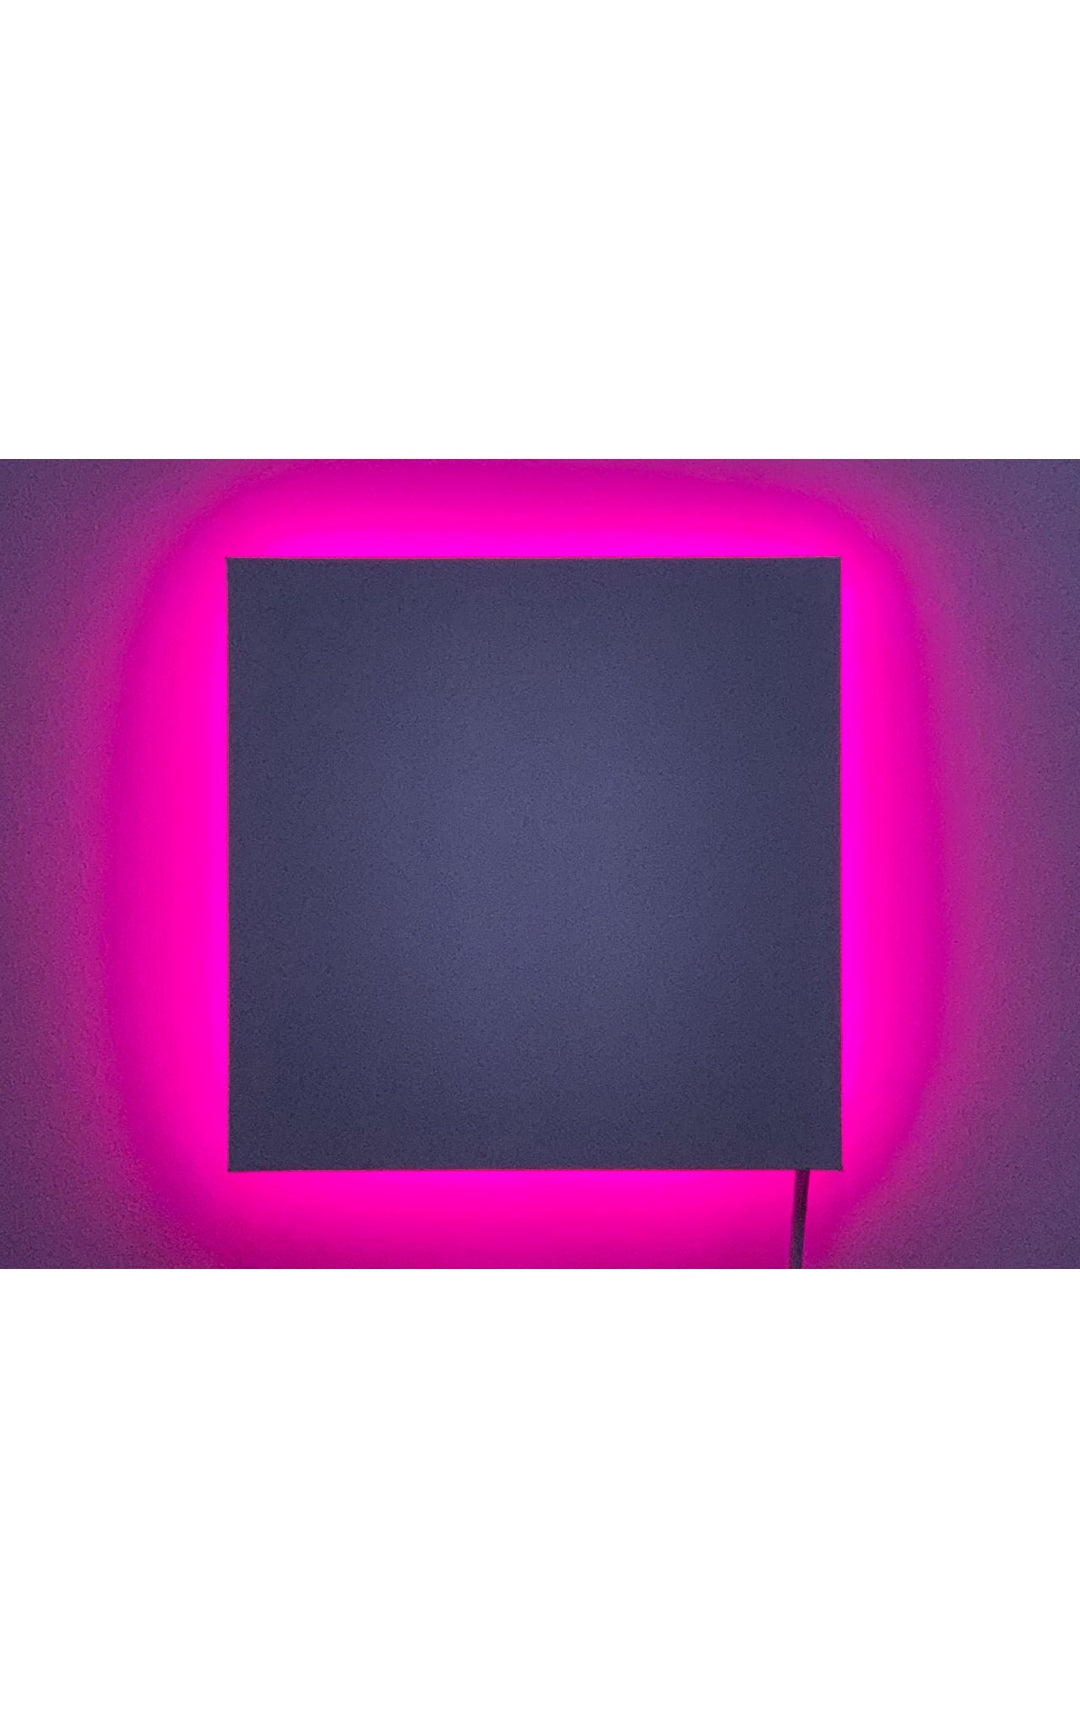 LED square sculpture